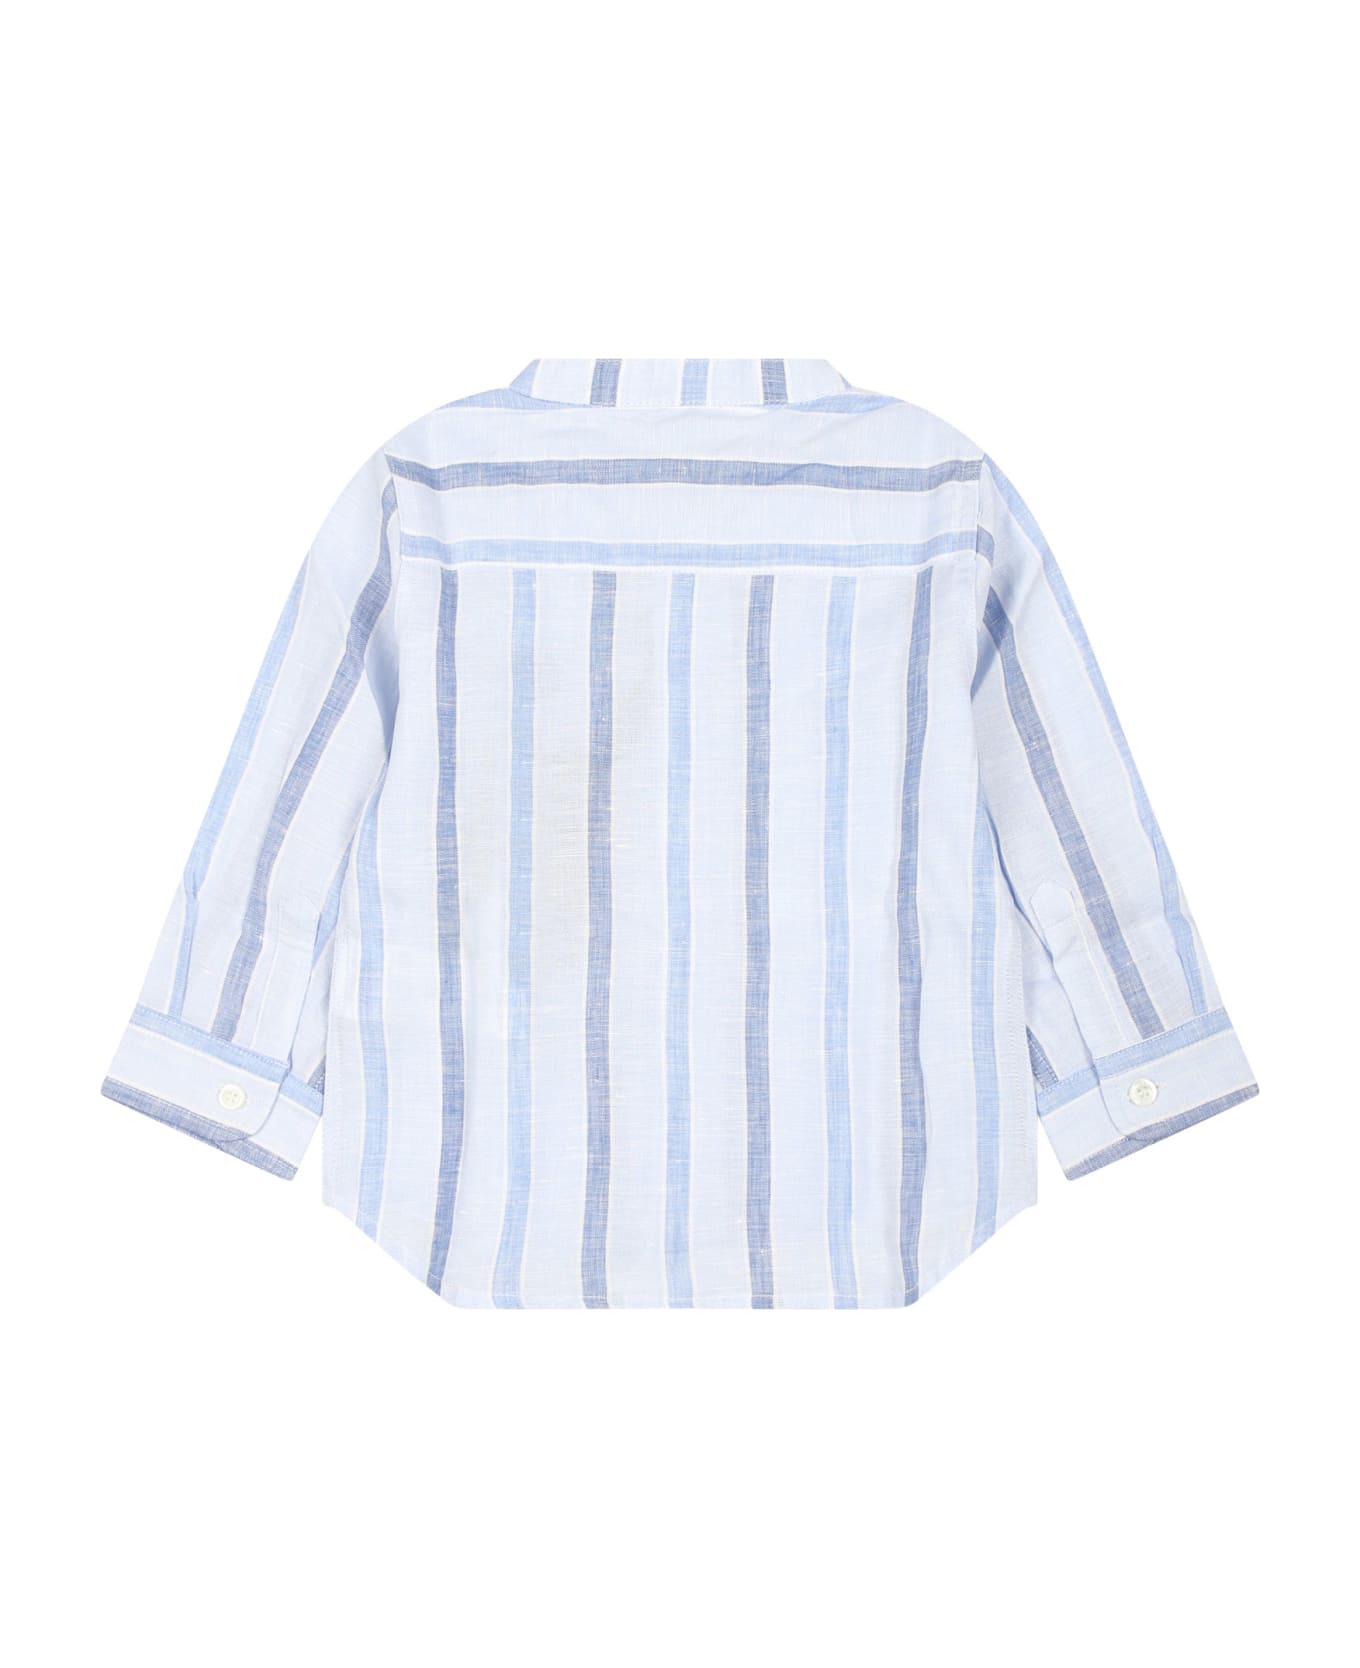 Etro Light Blue Shirt For Baby Boy With Logo - Light Blue シャツ